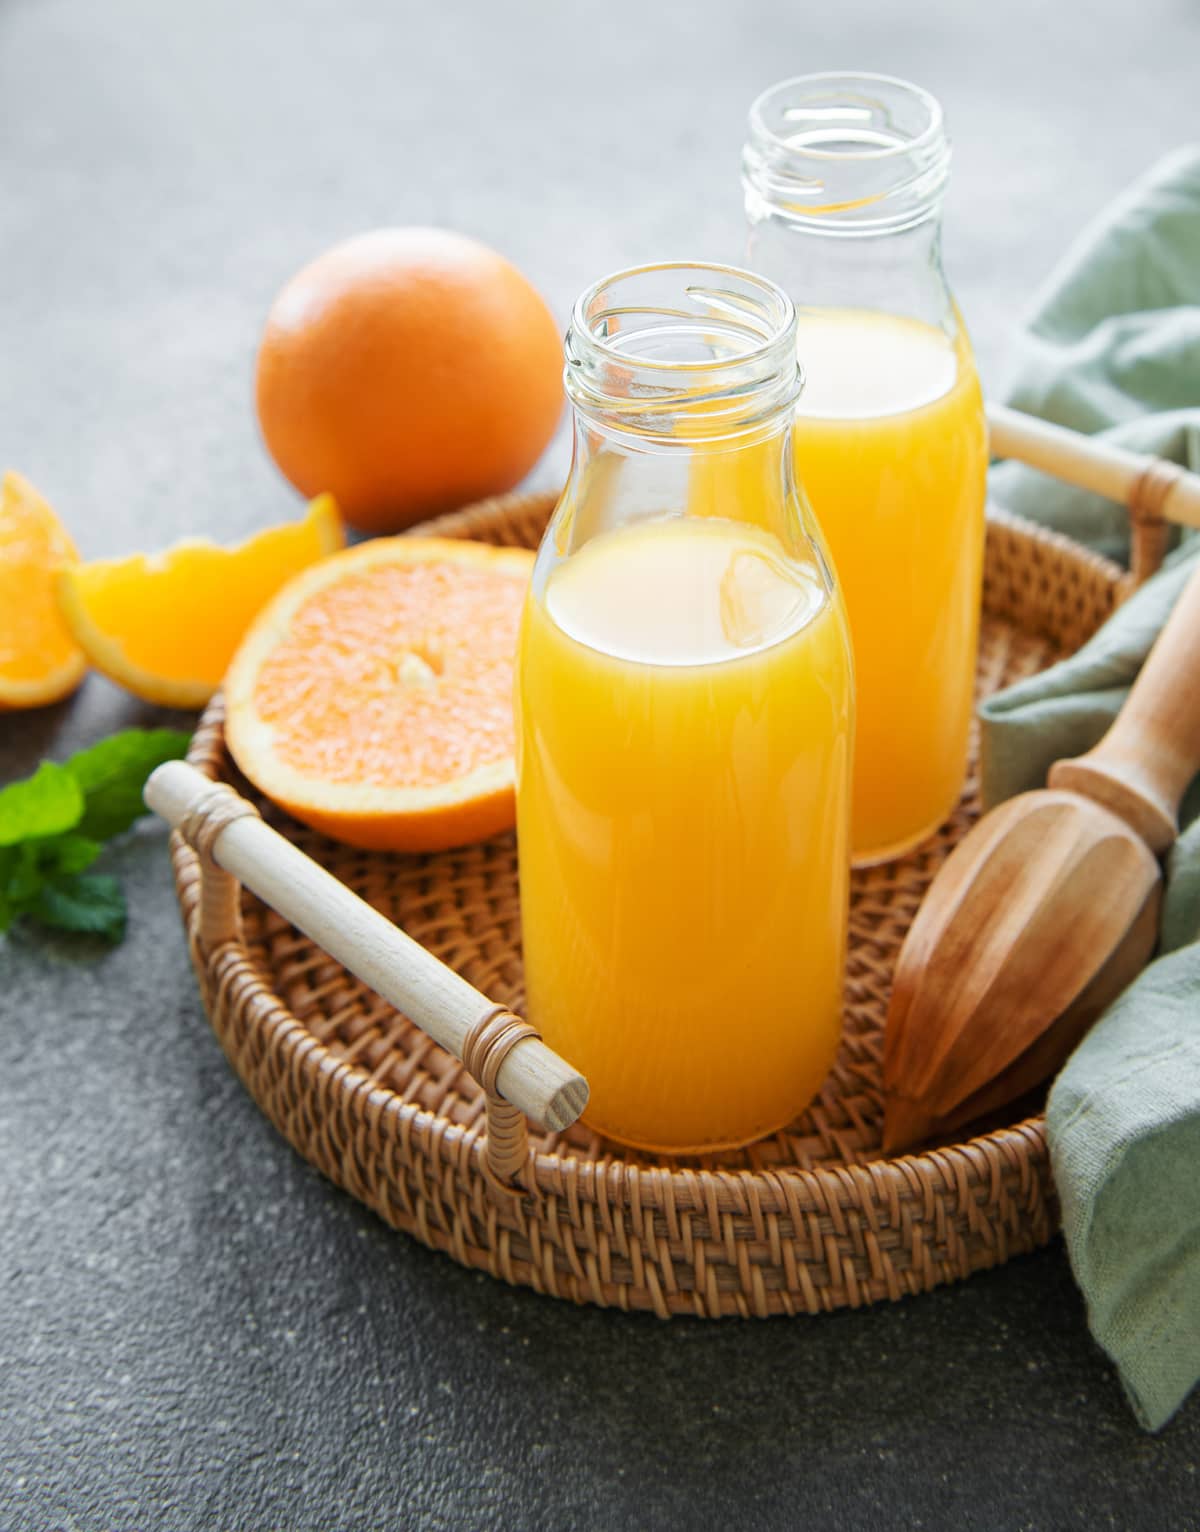 Two jars of orange juice on a tray.